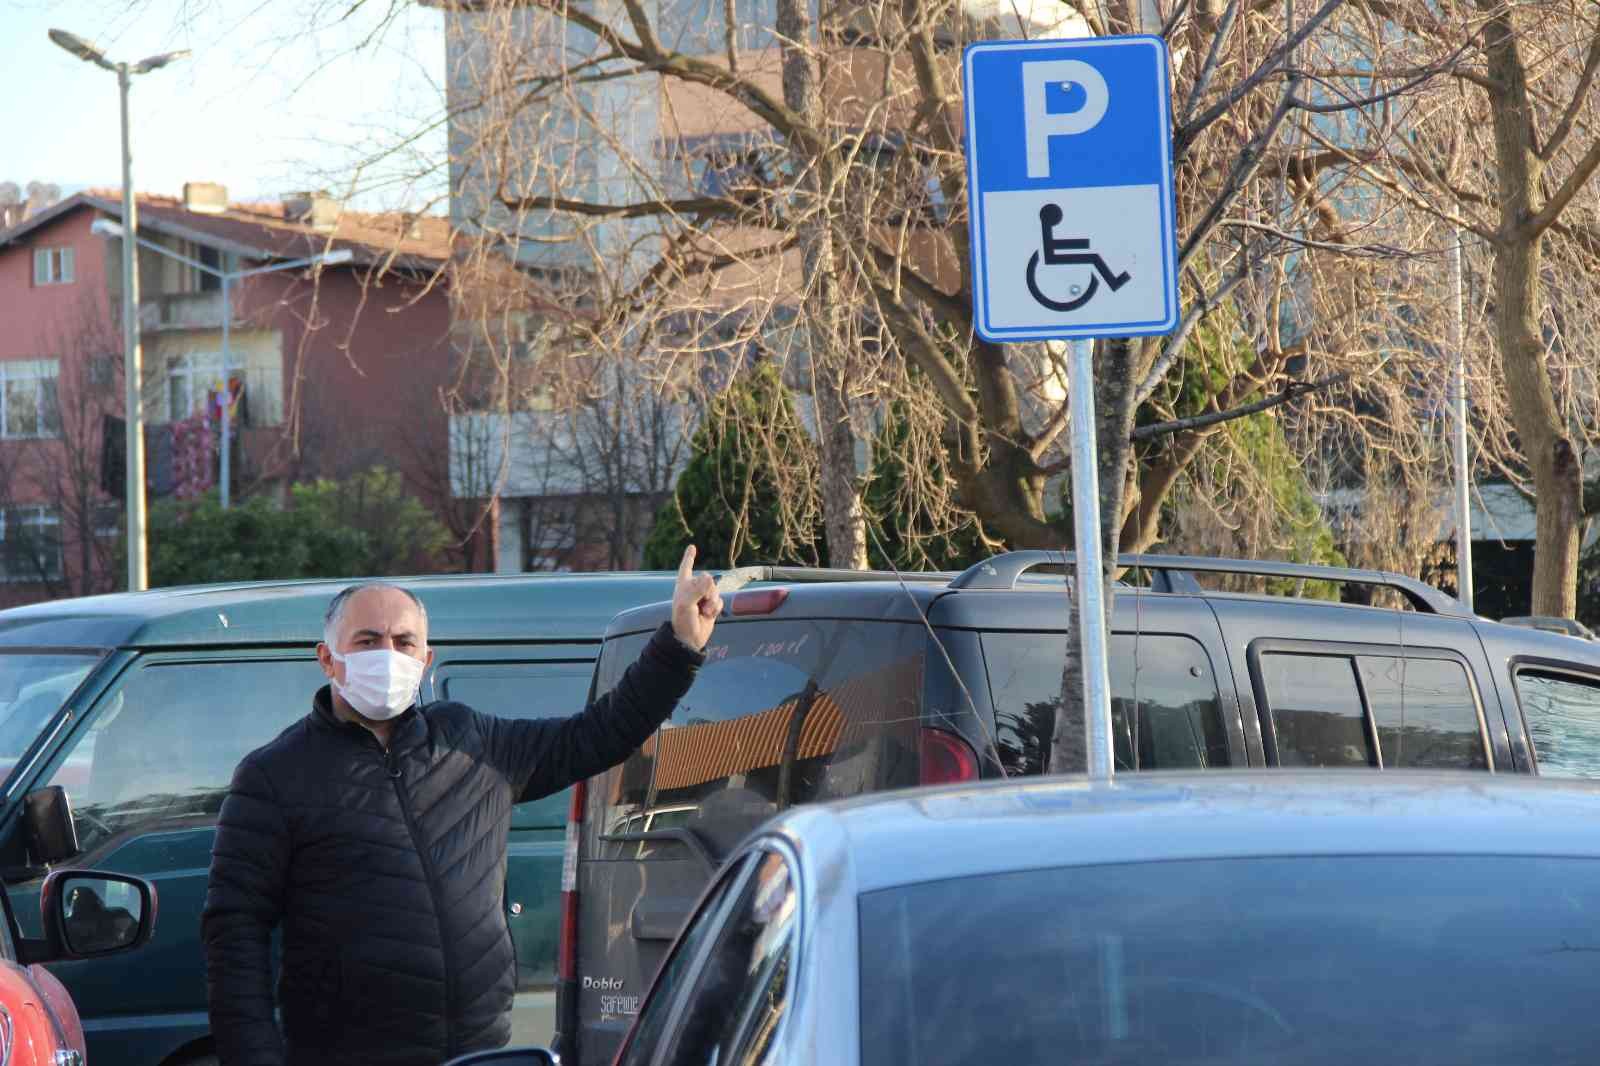 Engelli otomobilini park etti, ceza yedi #kocaeli